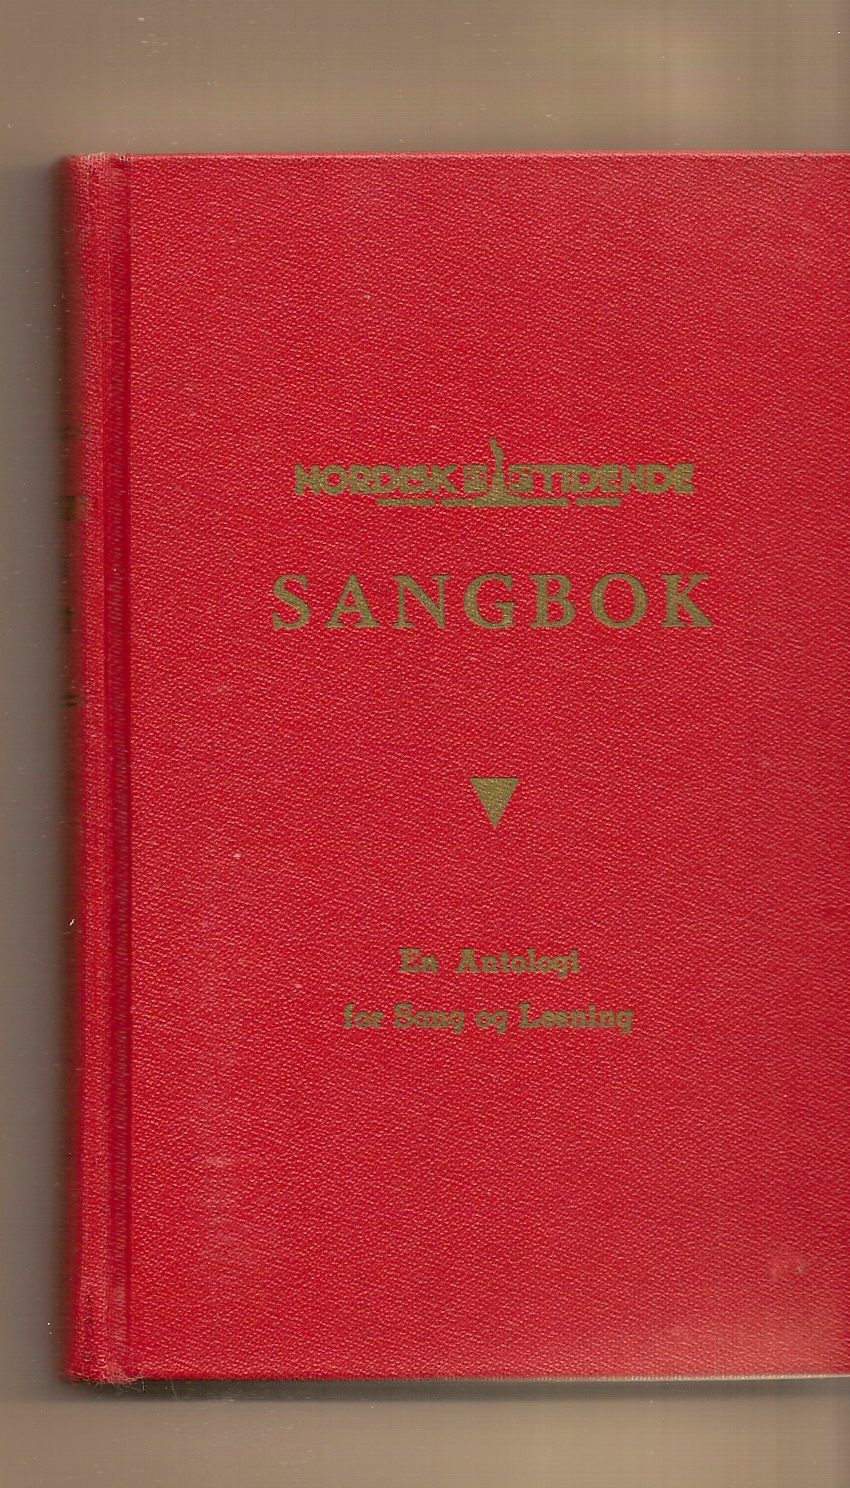 ANONYMOUS - Nordisk Tidende Sangbok : En Samling Norske Sanger Og Dikt : En Antologi Fo R Sang Og Lesning